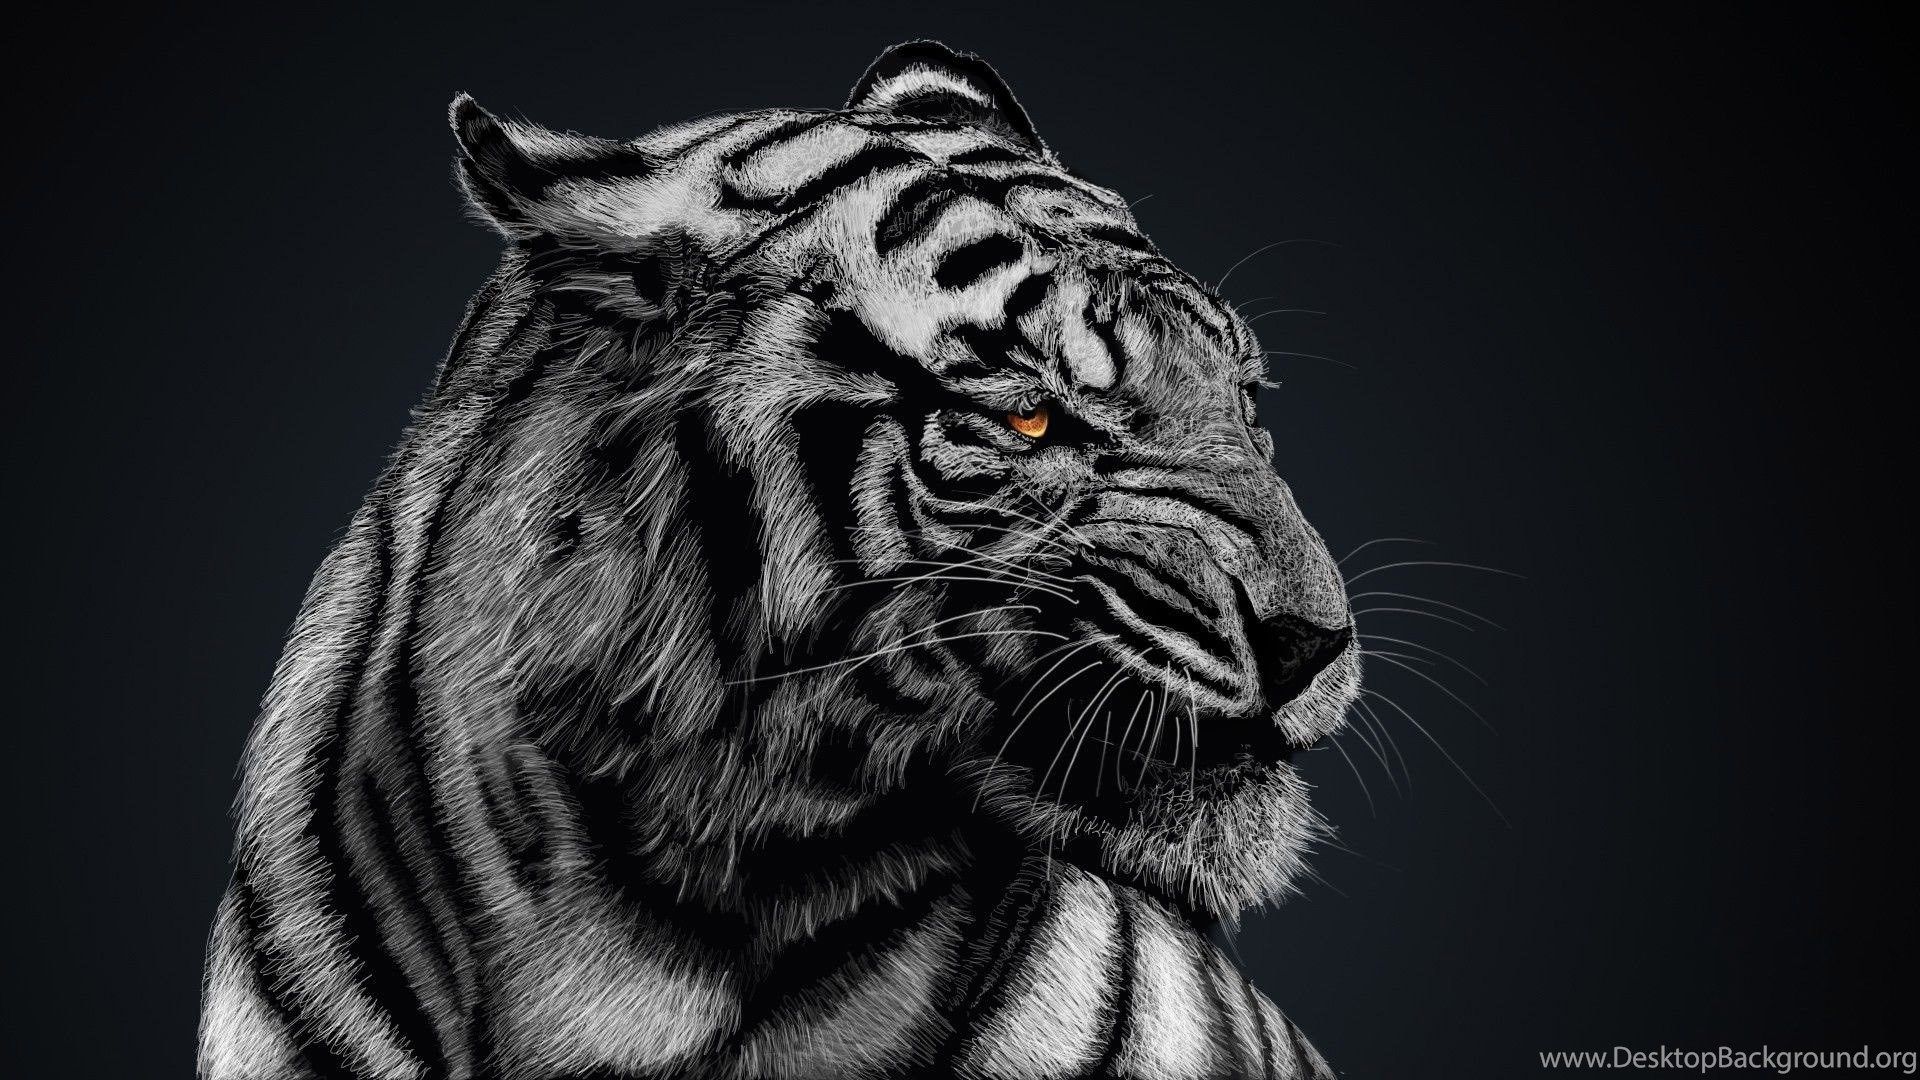 Black And White Tiger Wallpaper High Quality, Animal Wallpaper. Desktop Background